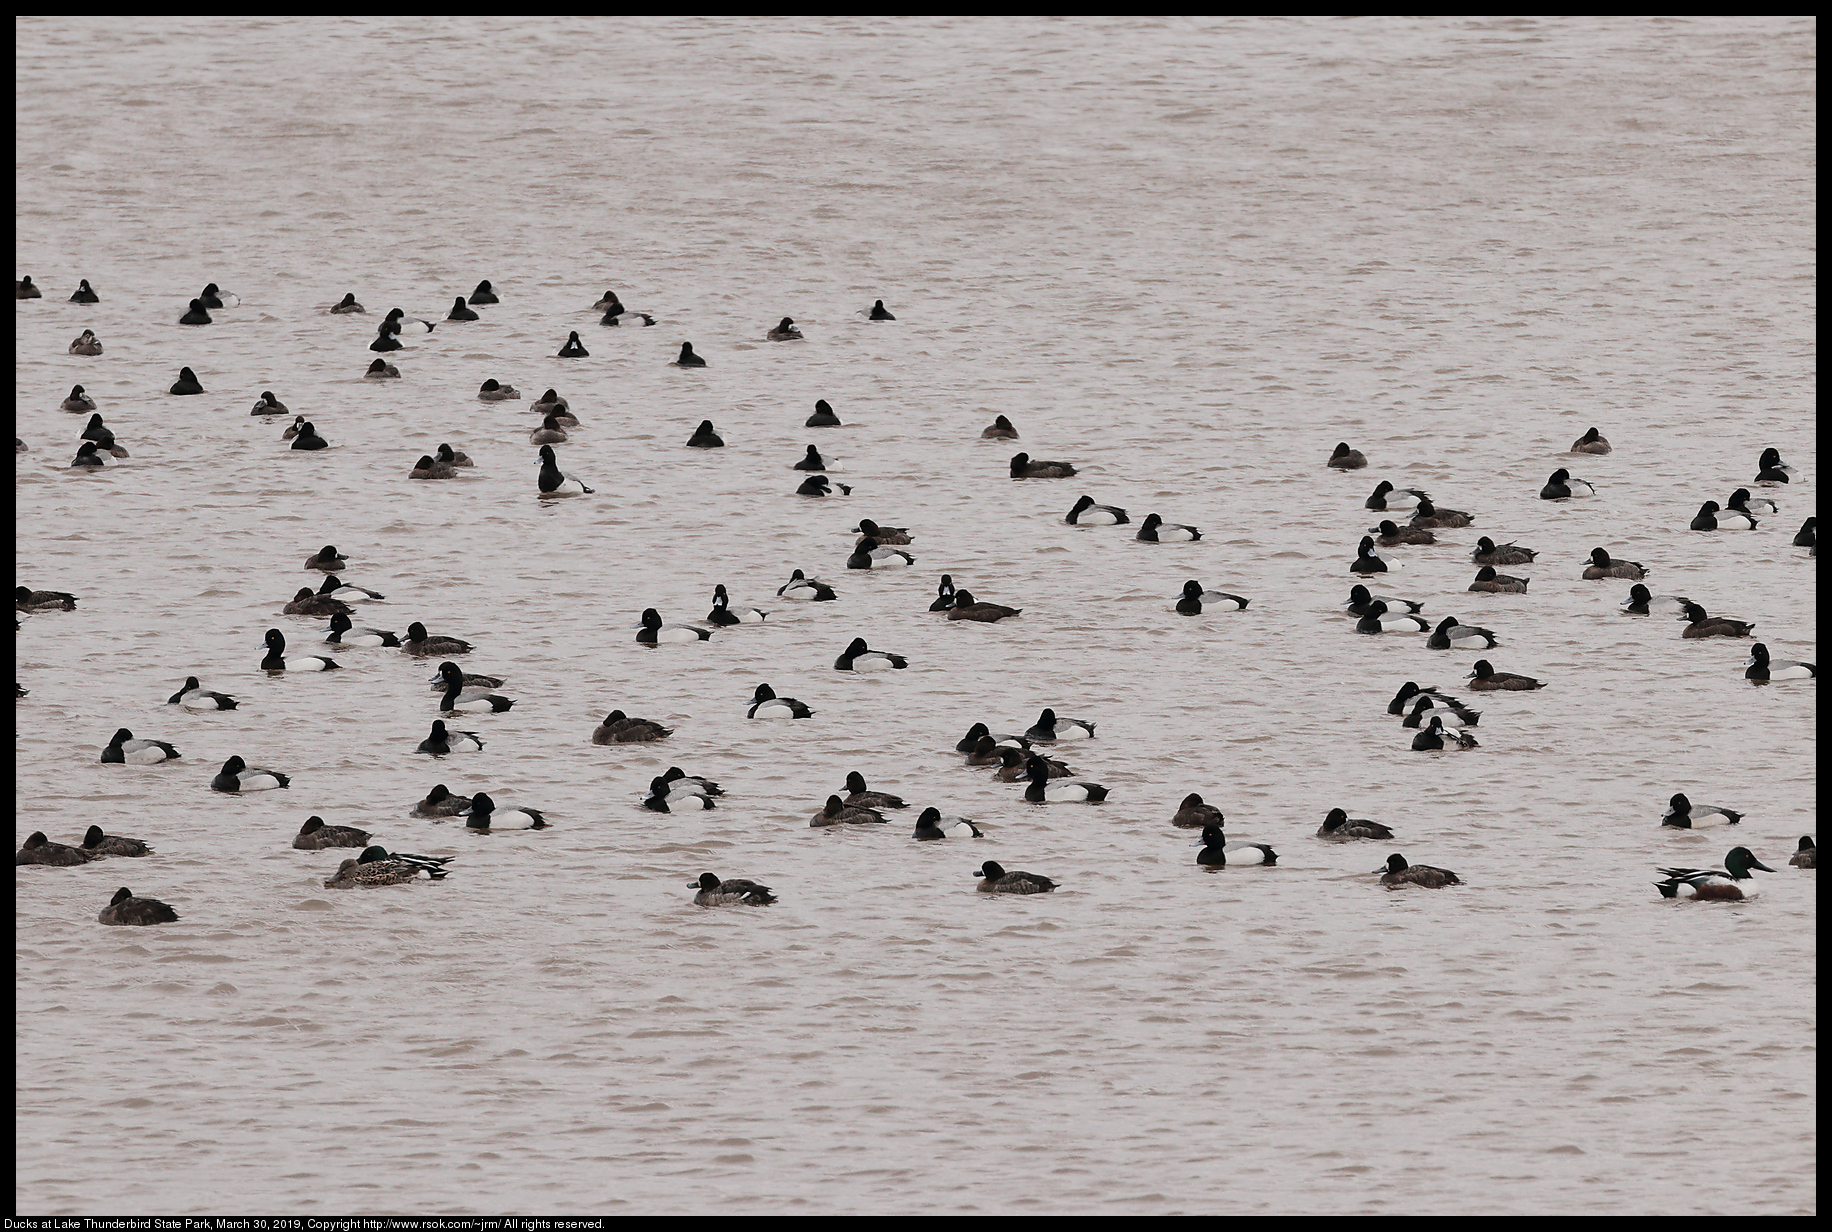 Ducks at Lake Thunderbird State Park, March 30, 2019